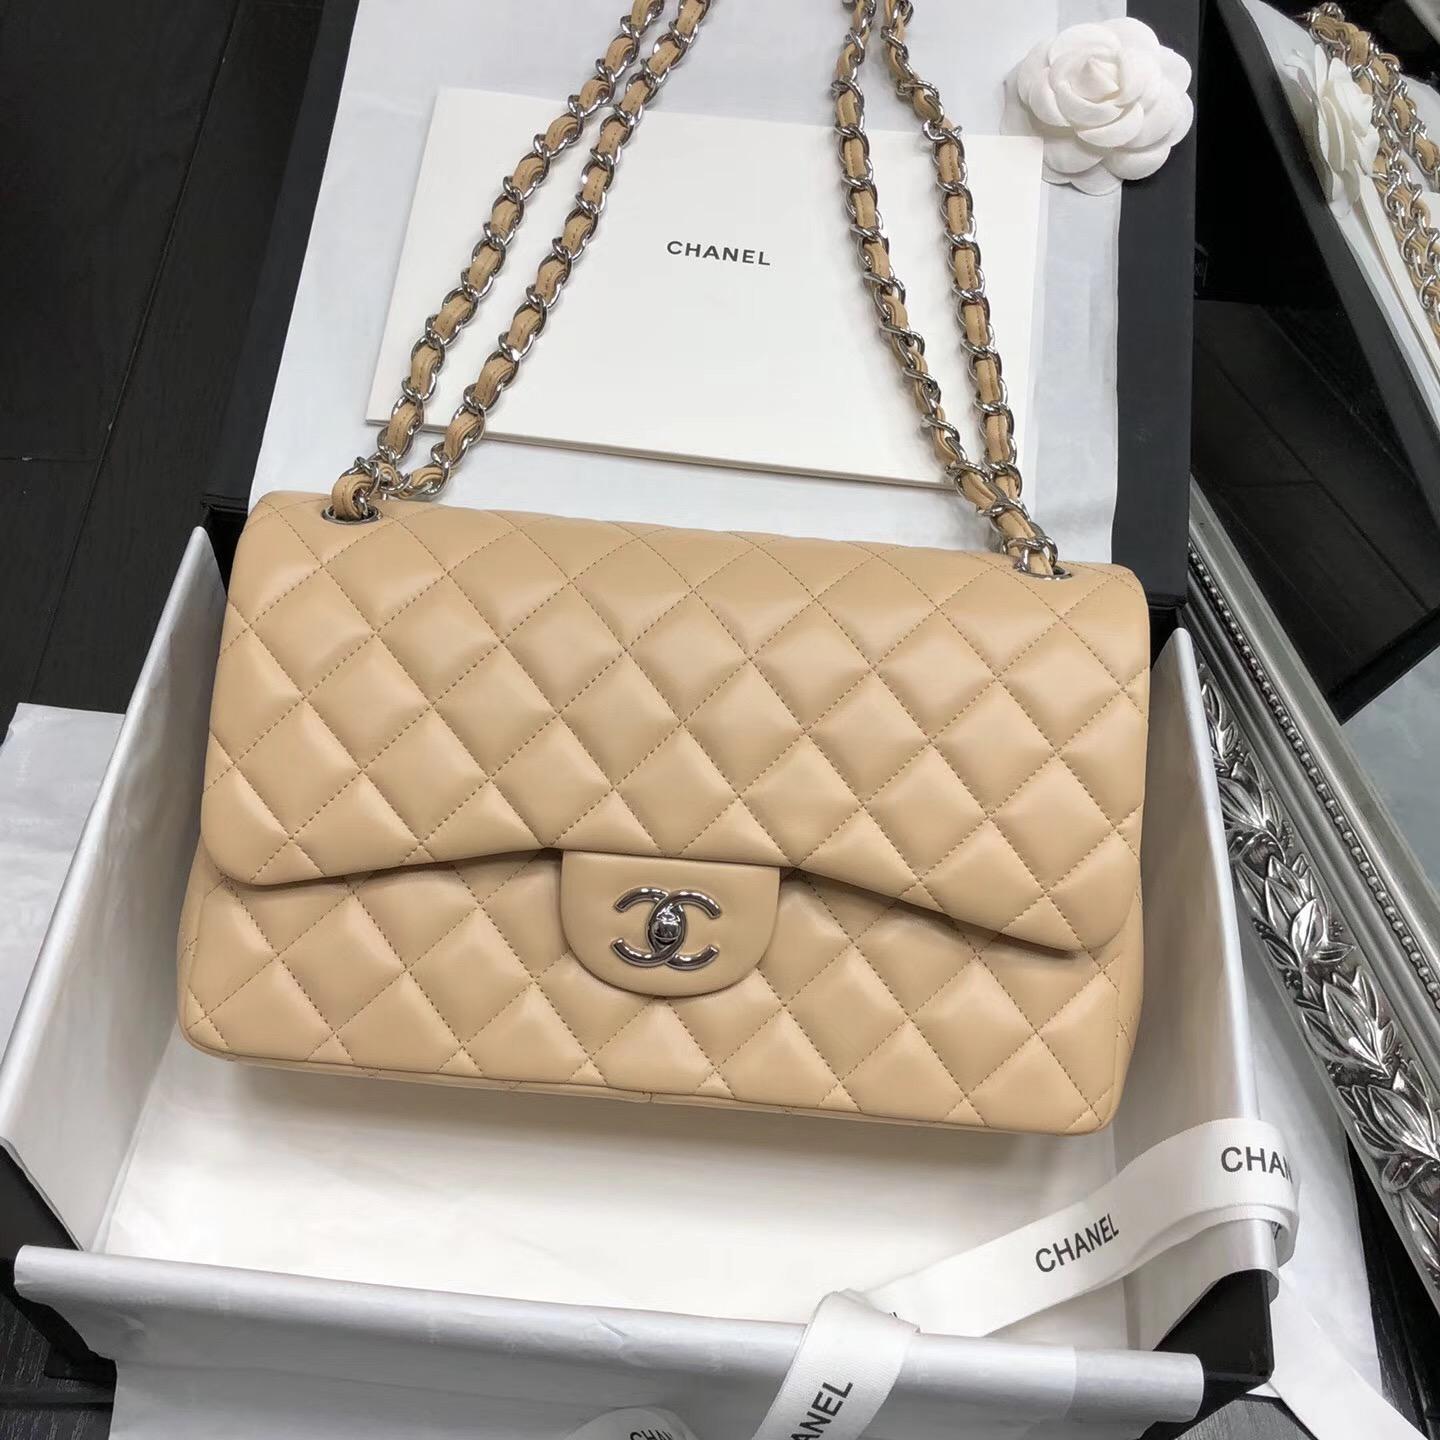 Chanel Classic Handbag Colors For Sale | IQS Executive